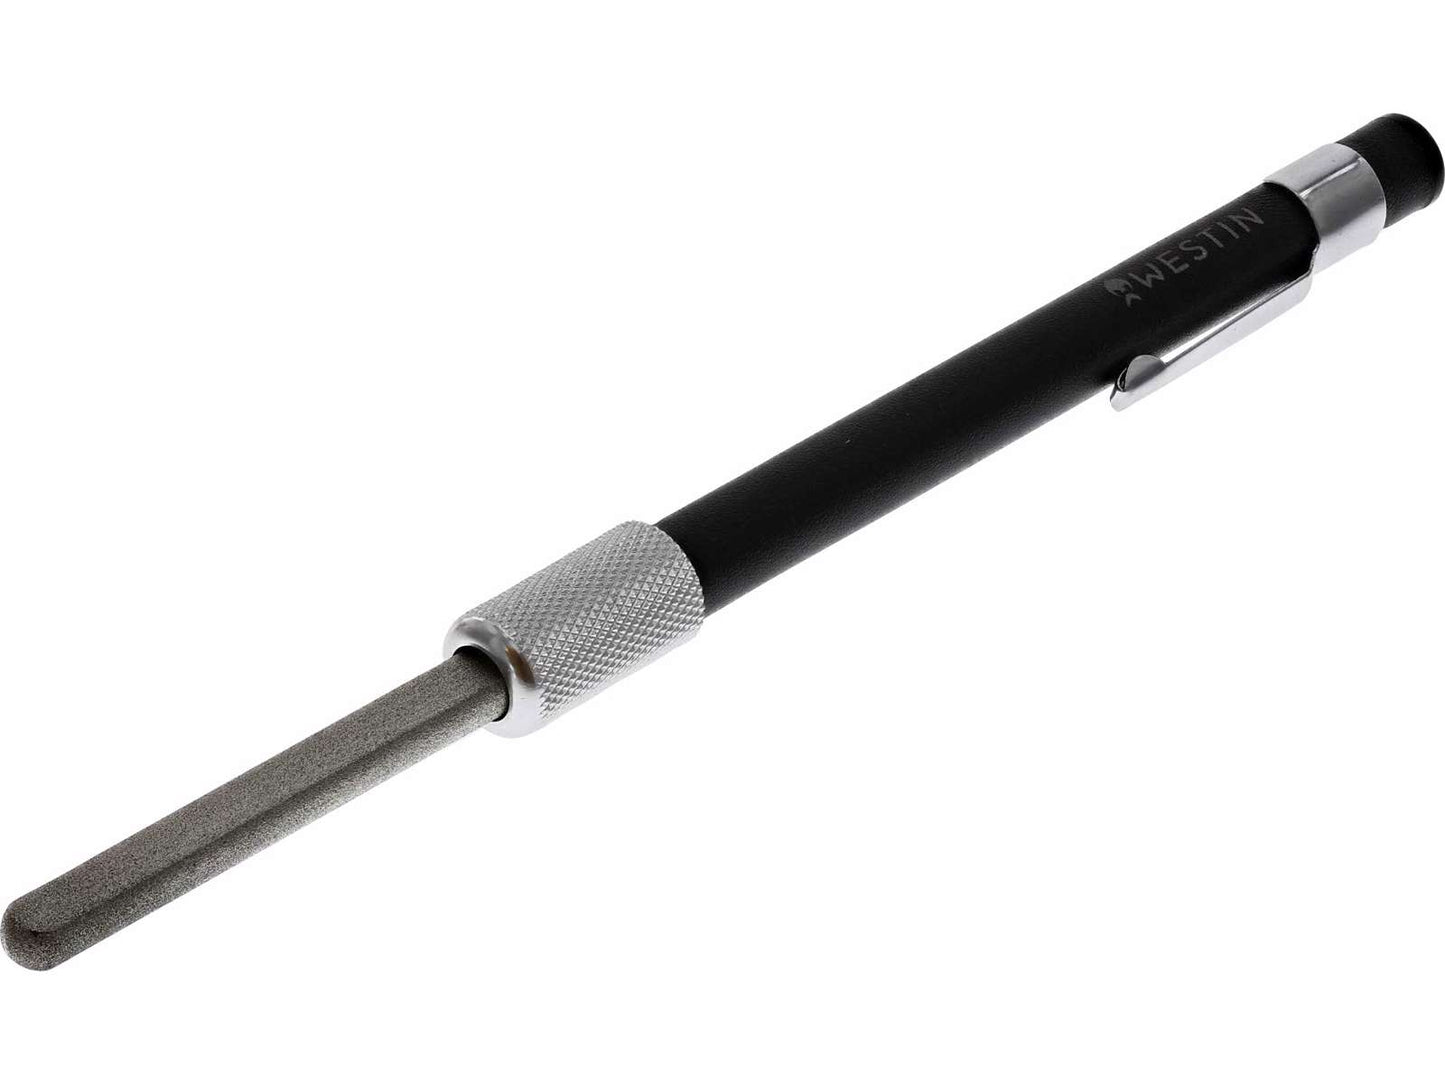 Westin Diamond Pen Hook Sharpener